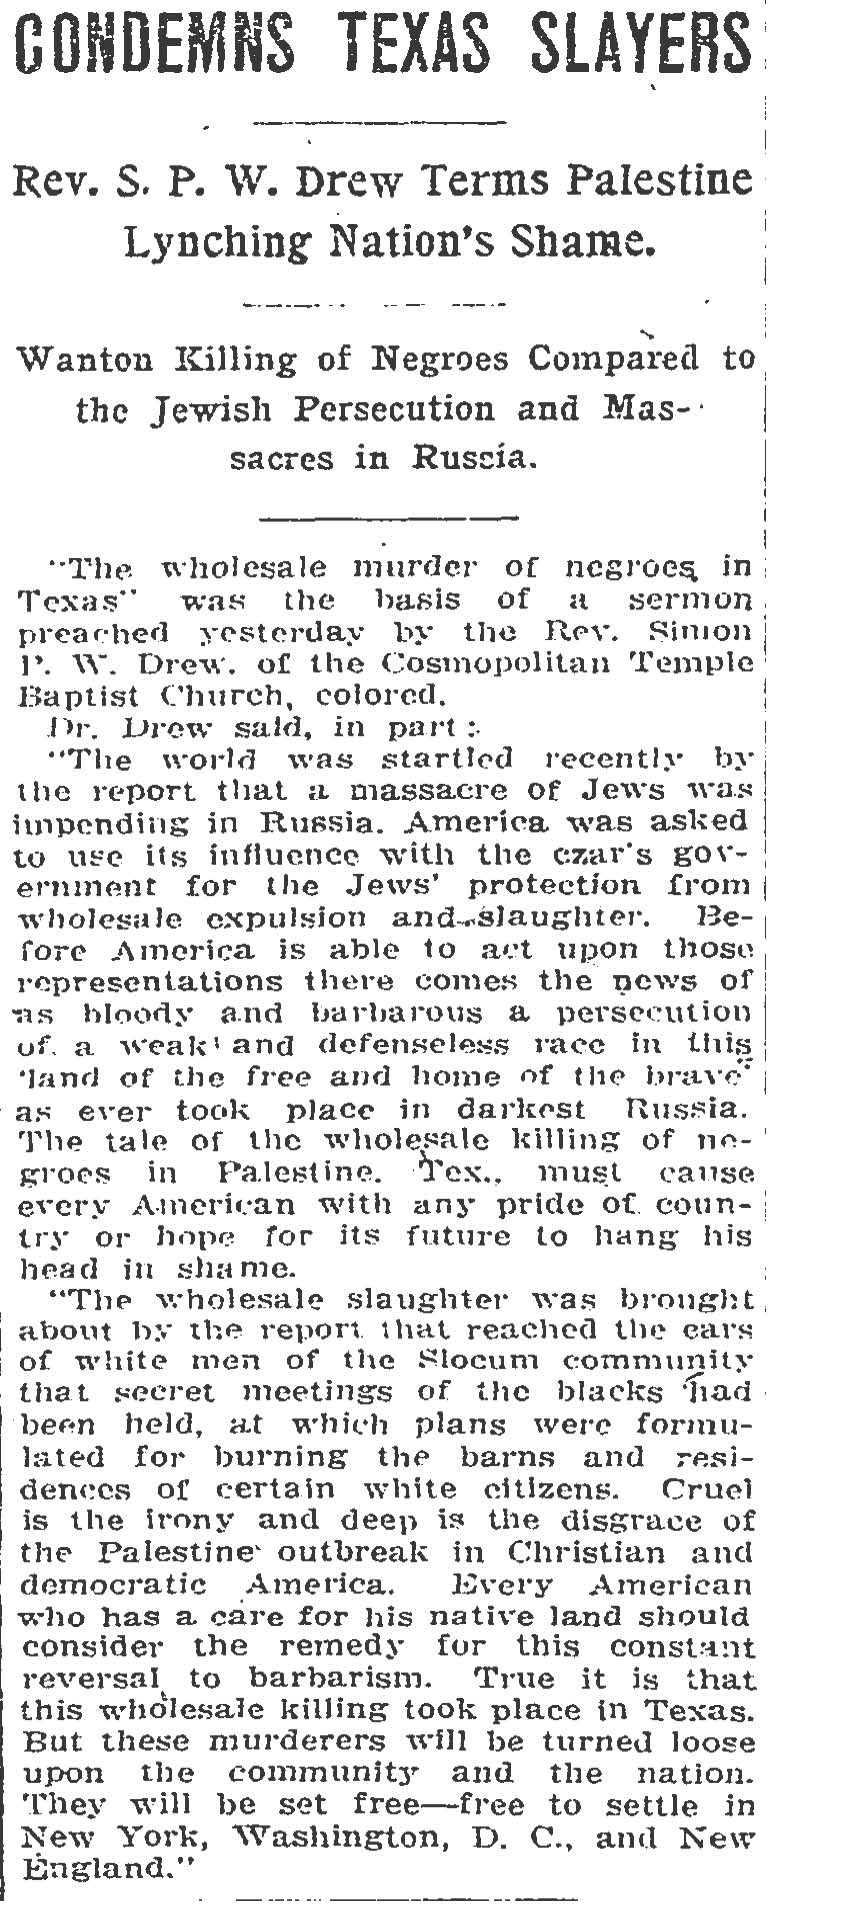  "Condemns Texas Slayers" August 8,1910 (Page 12) (The Washington Post) 